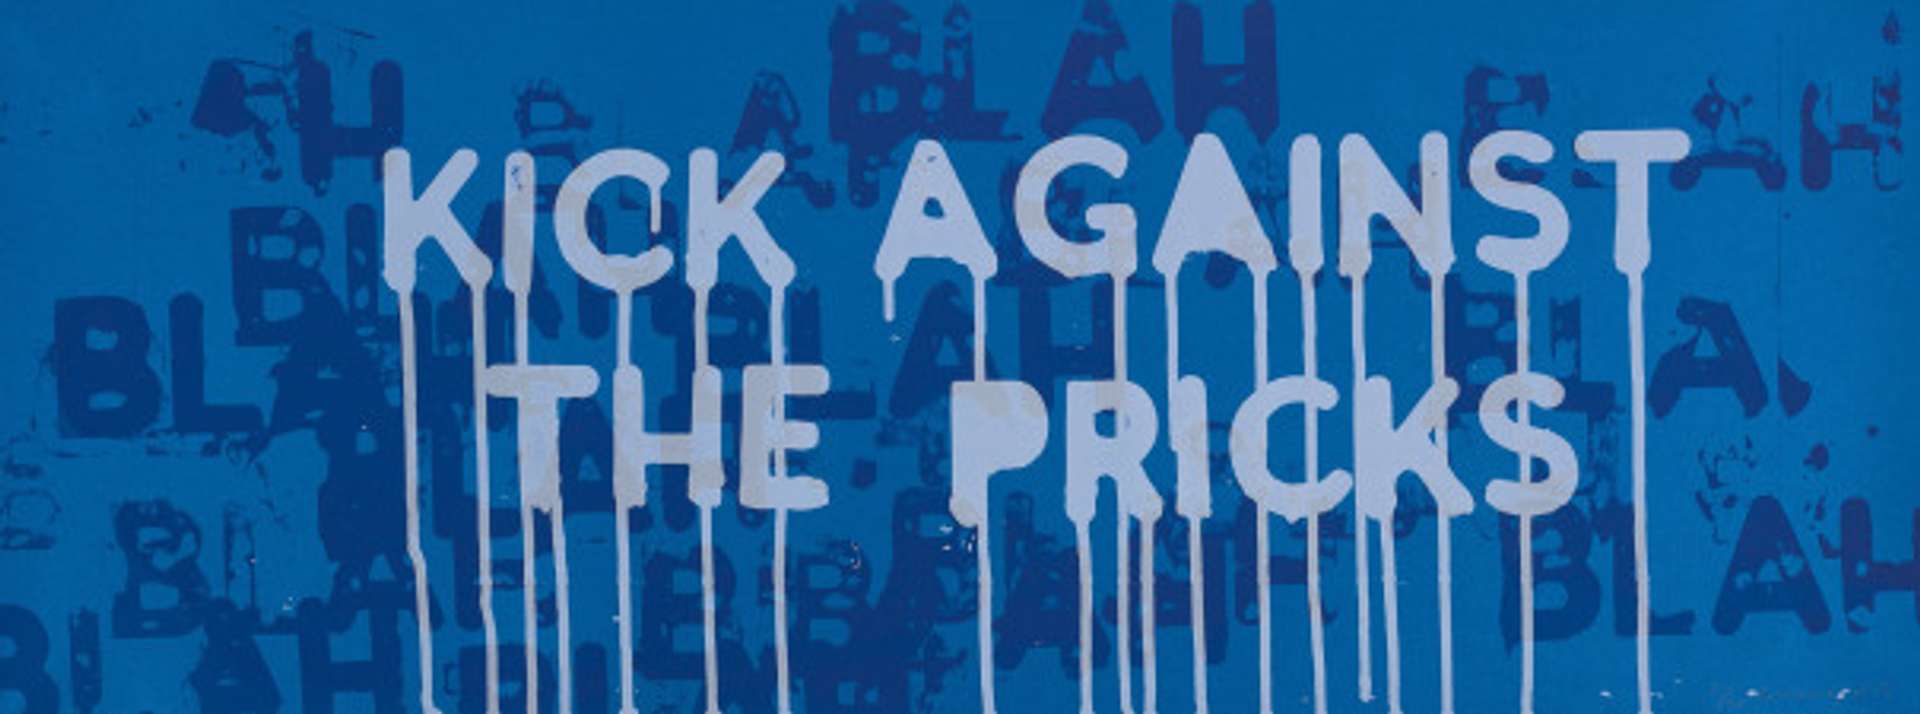 Kick Against The Pricks - Signed Print by Mel Bochner 2018 - MyArtBroker